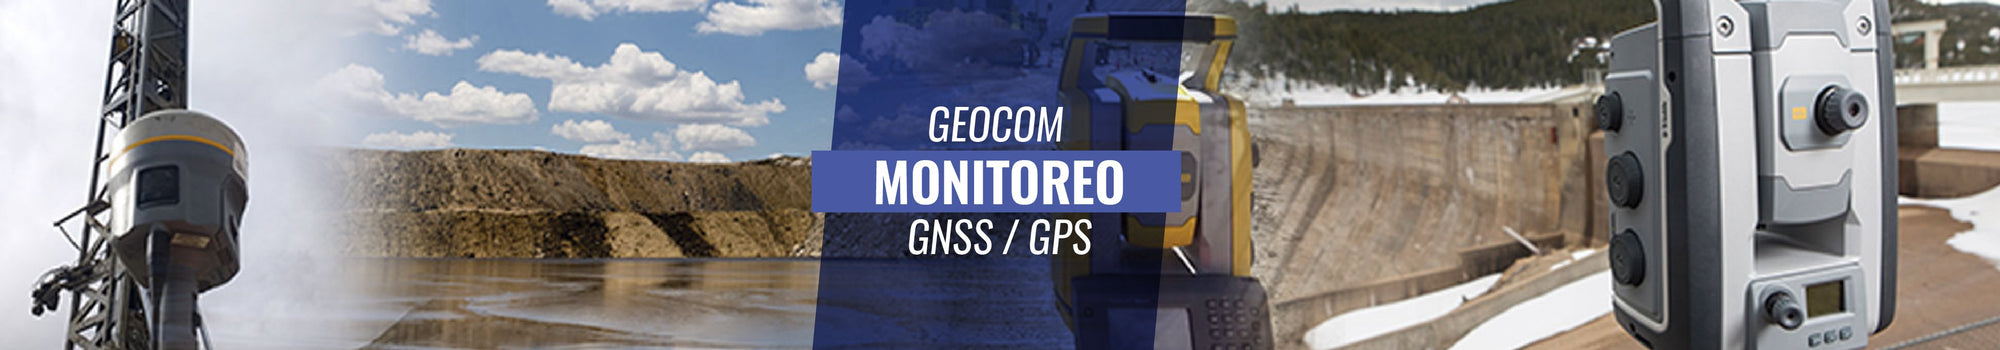 GNSS/GPS Monitoreo